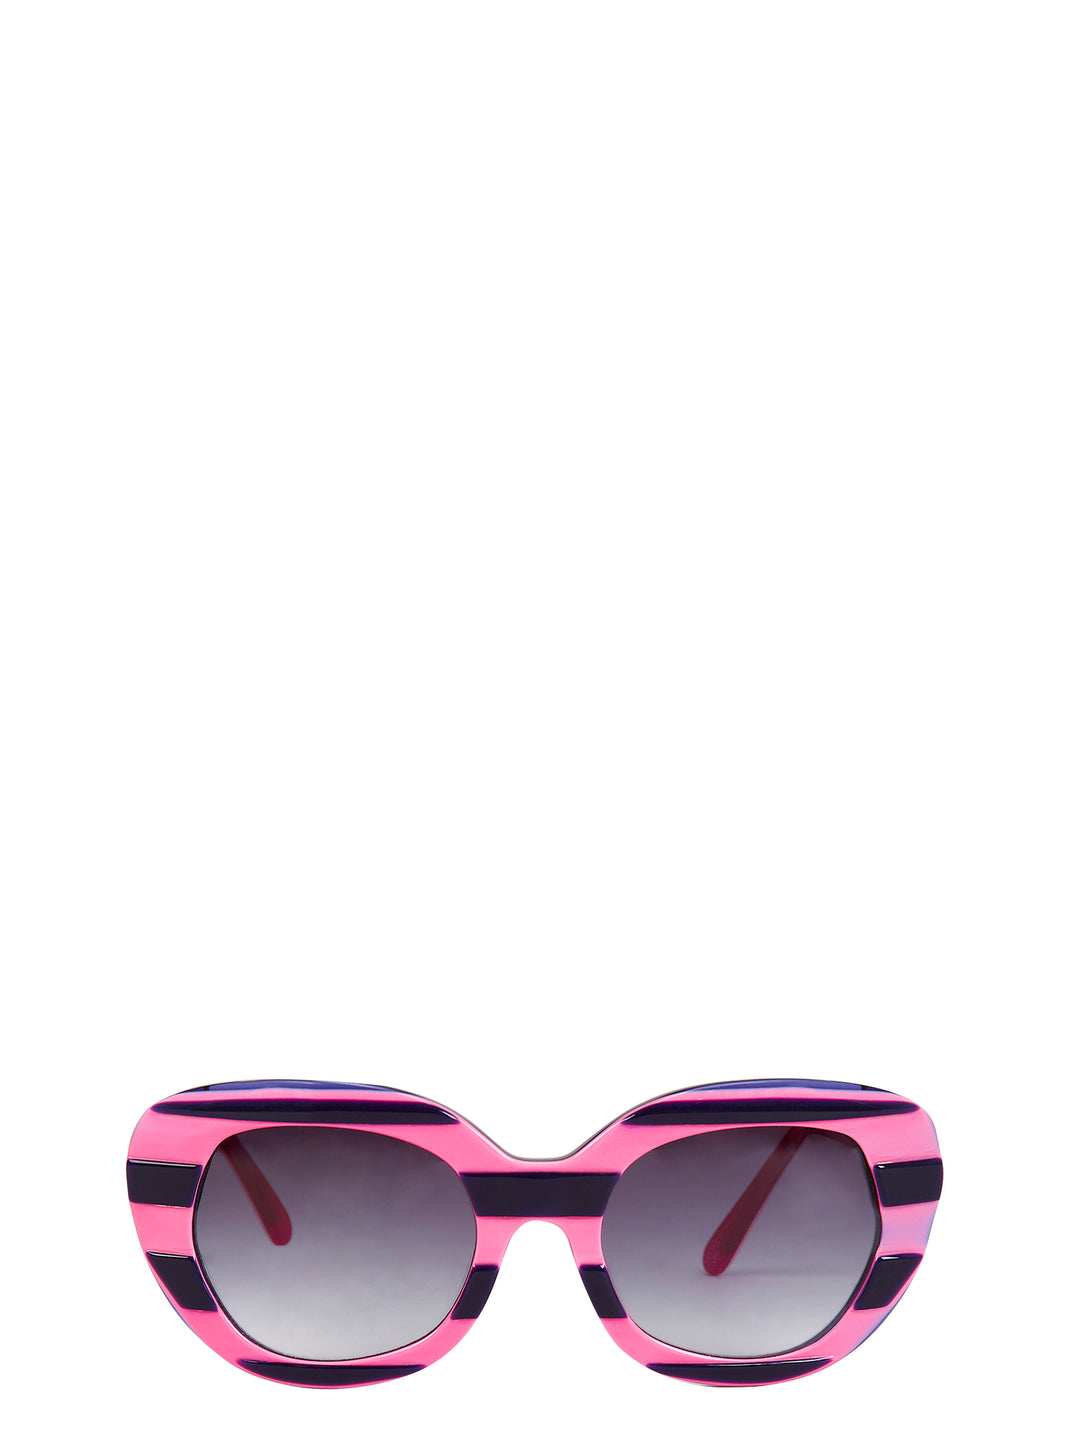 Sunglasses Limited Edition